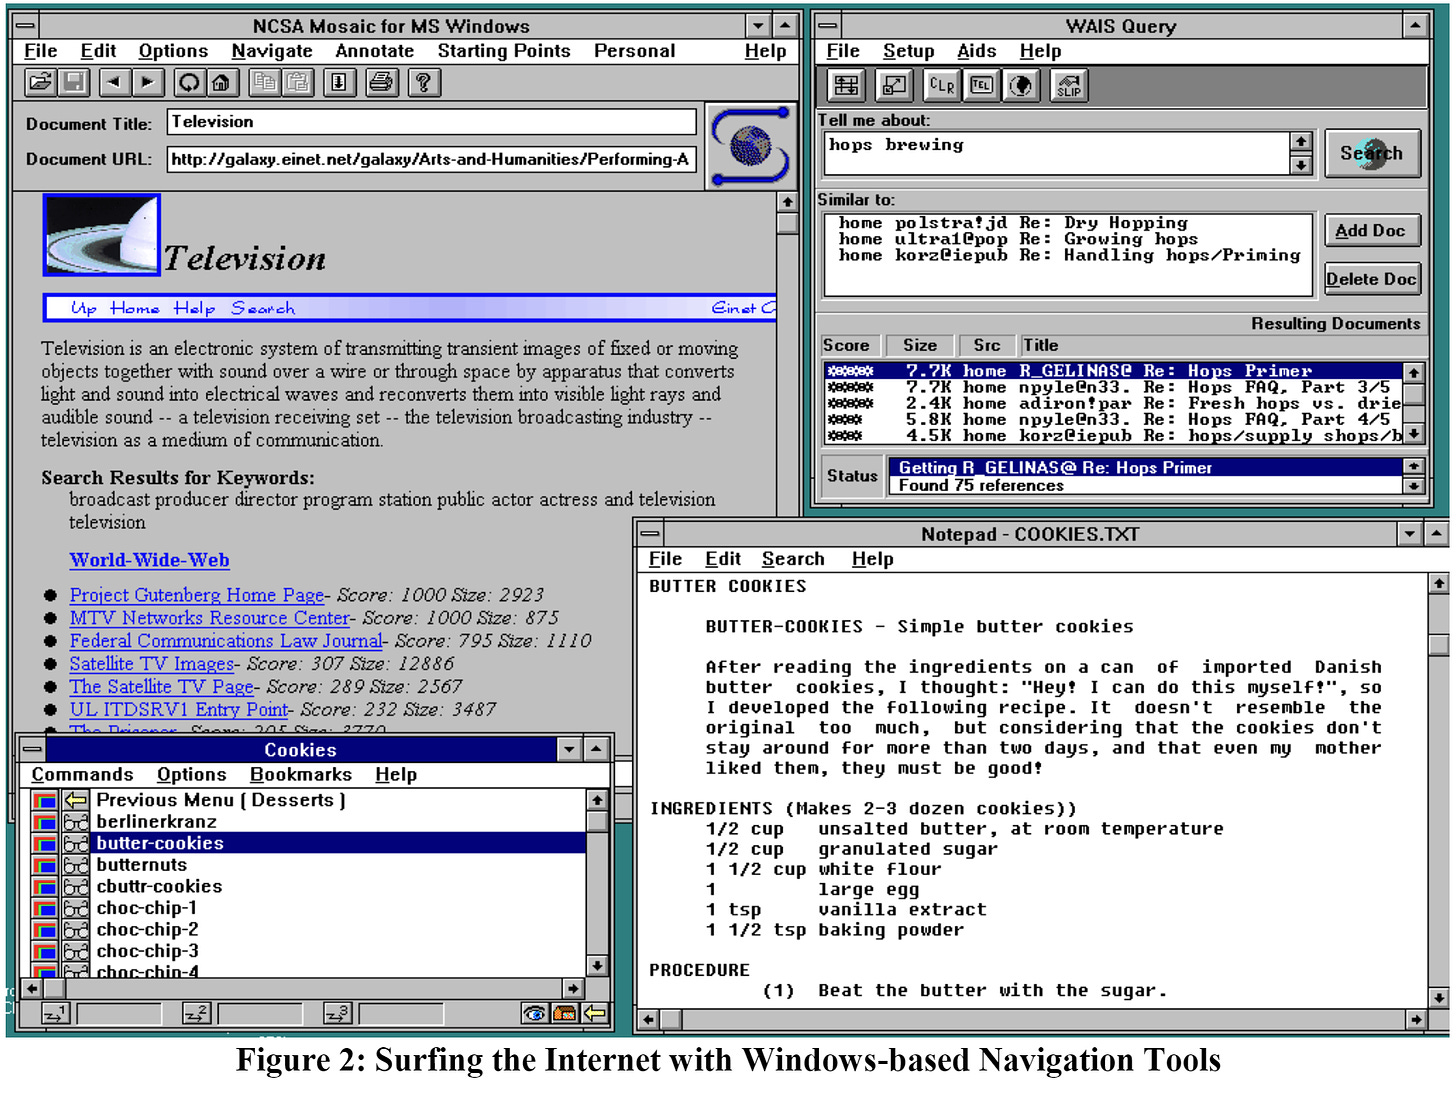 Several collected screenshots of "Internet Navigation Tools" including NCSA Mosaic, Gopher, WAIS